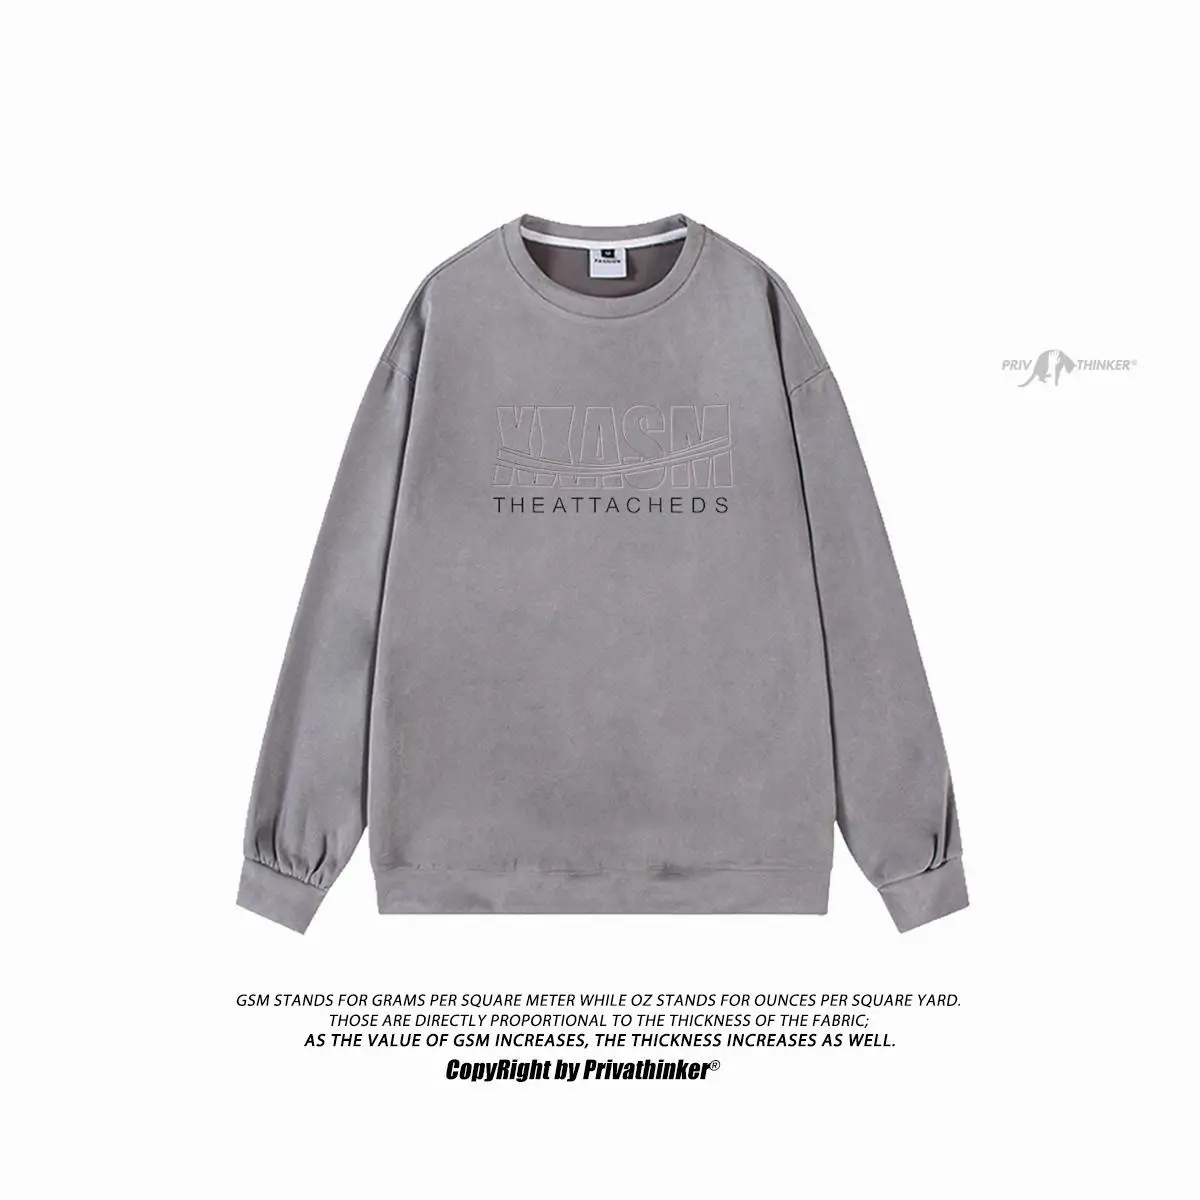 

Privathinker Chic Simple Letter Printed Sweatshirt Men Oversized Hoodies Harajuku Suede Pullovers Casual Long Sleeve Brand Tops